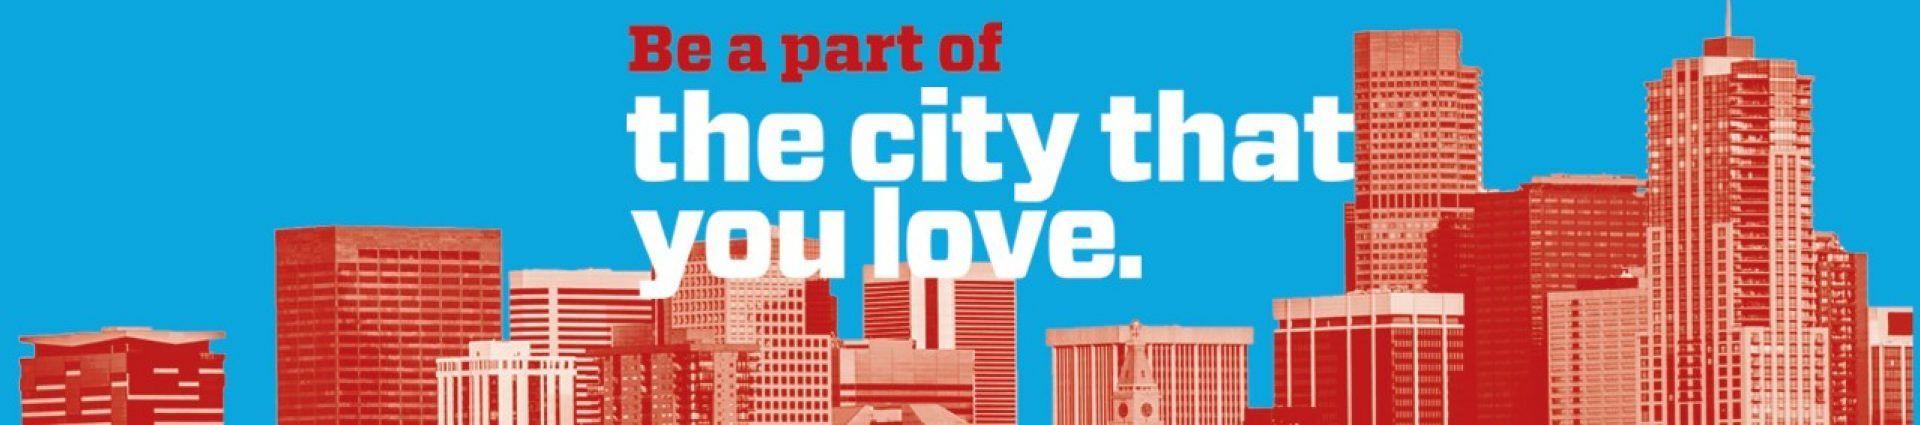 City and County of Denver Logo - City and County of Denver Official Site